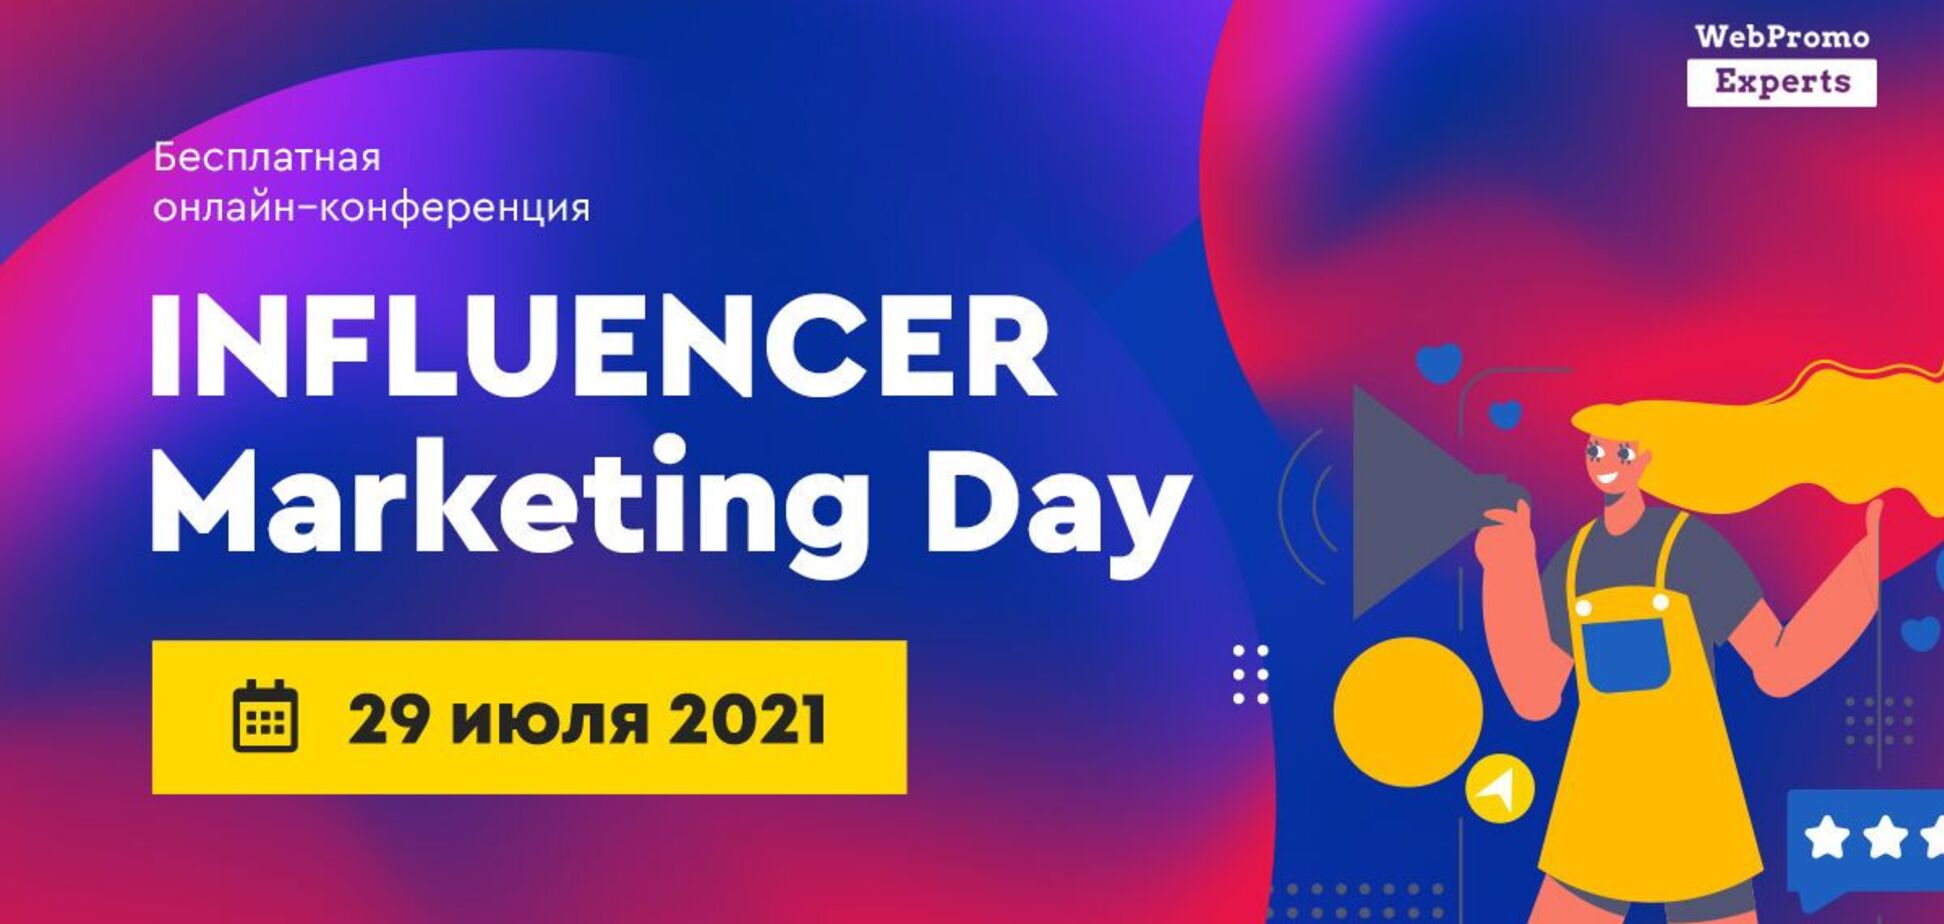 Influencer Marketing Day от WebPromoExperts пройдет 29 июля